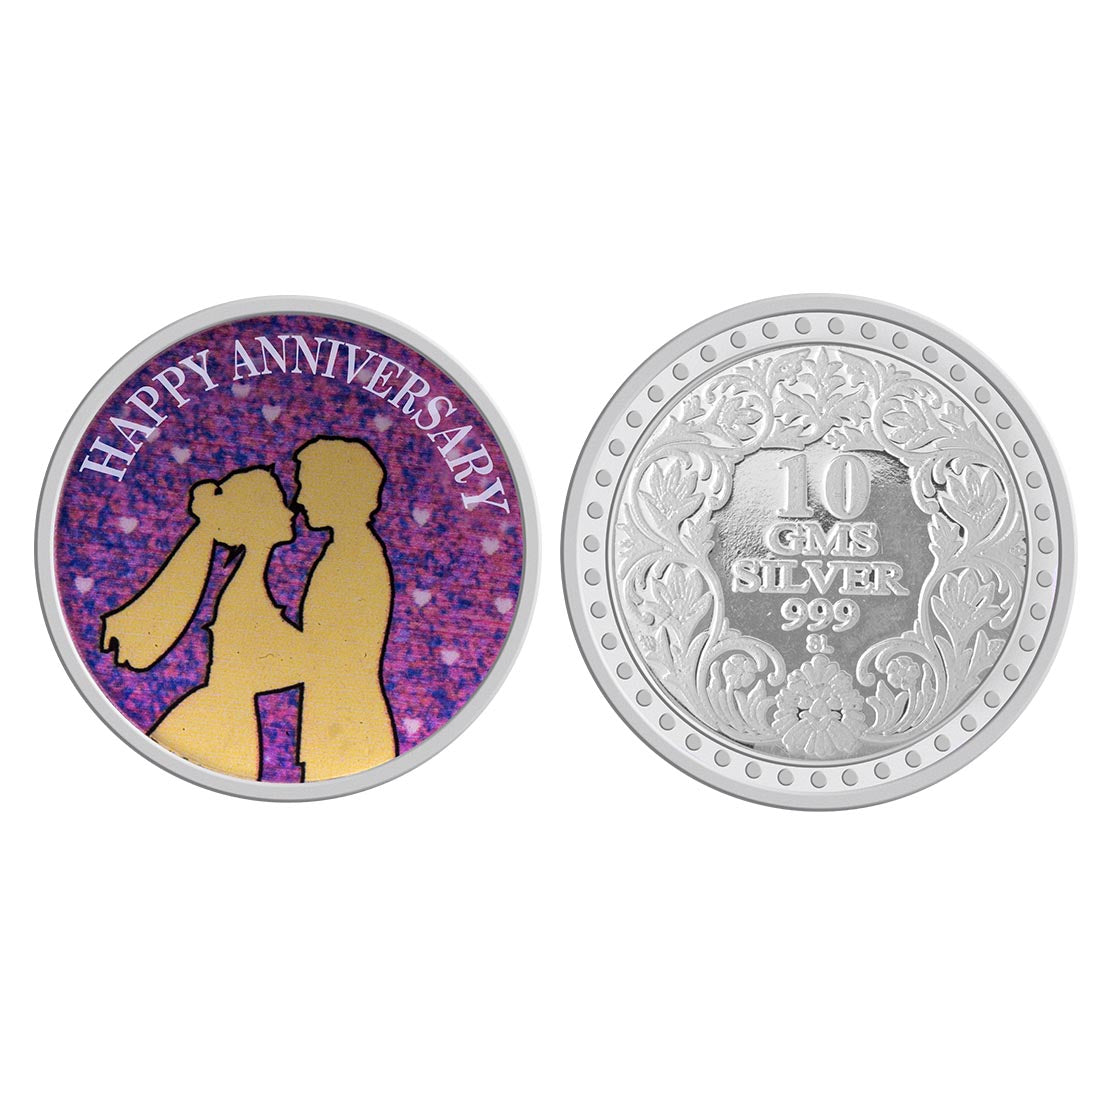 Happy Anniversary 10gm Silver Coin